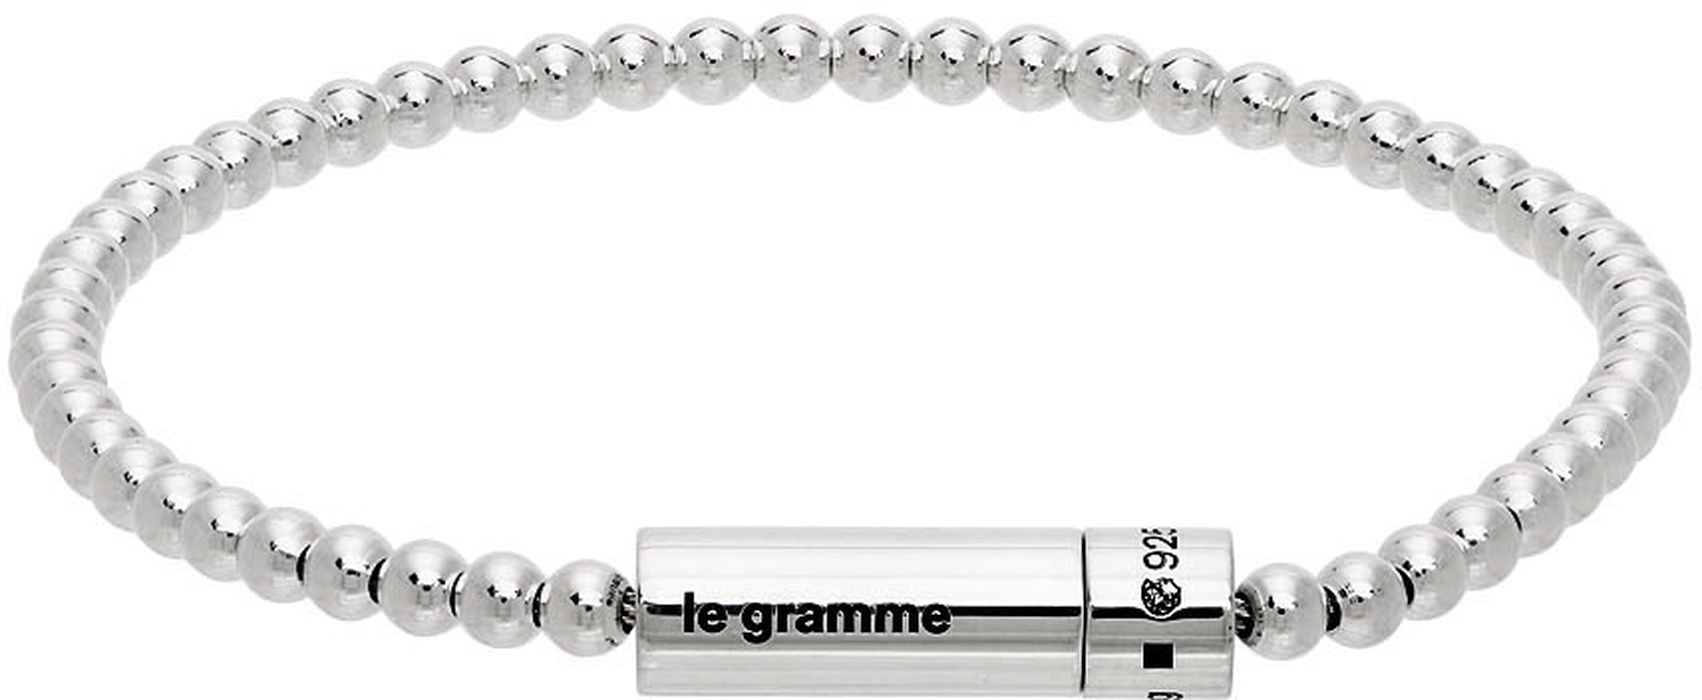 Le Gramme Silver Polished 'Le 11 Grammes' Beads Bracelet